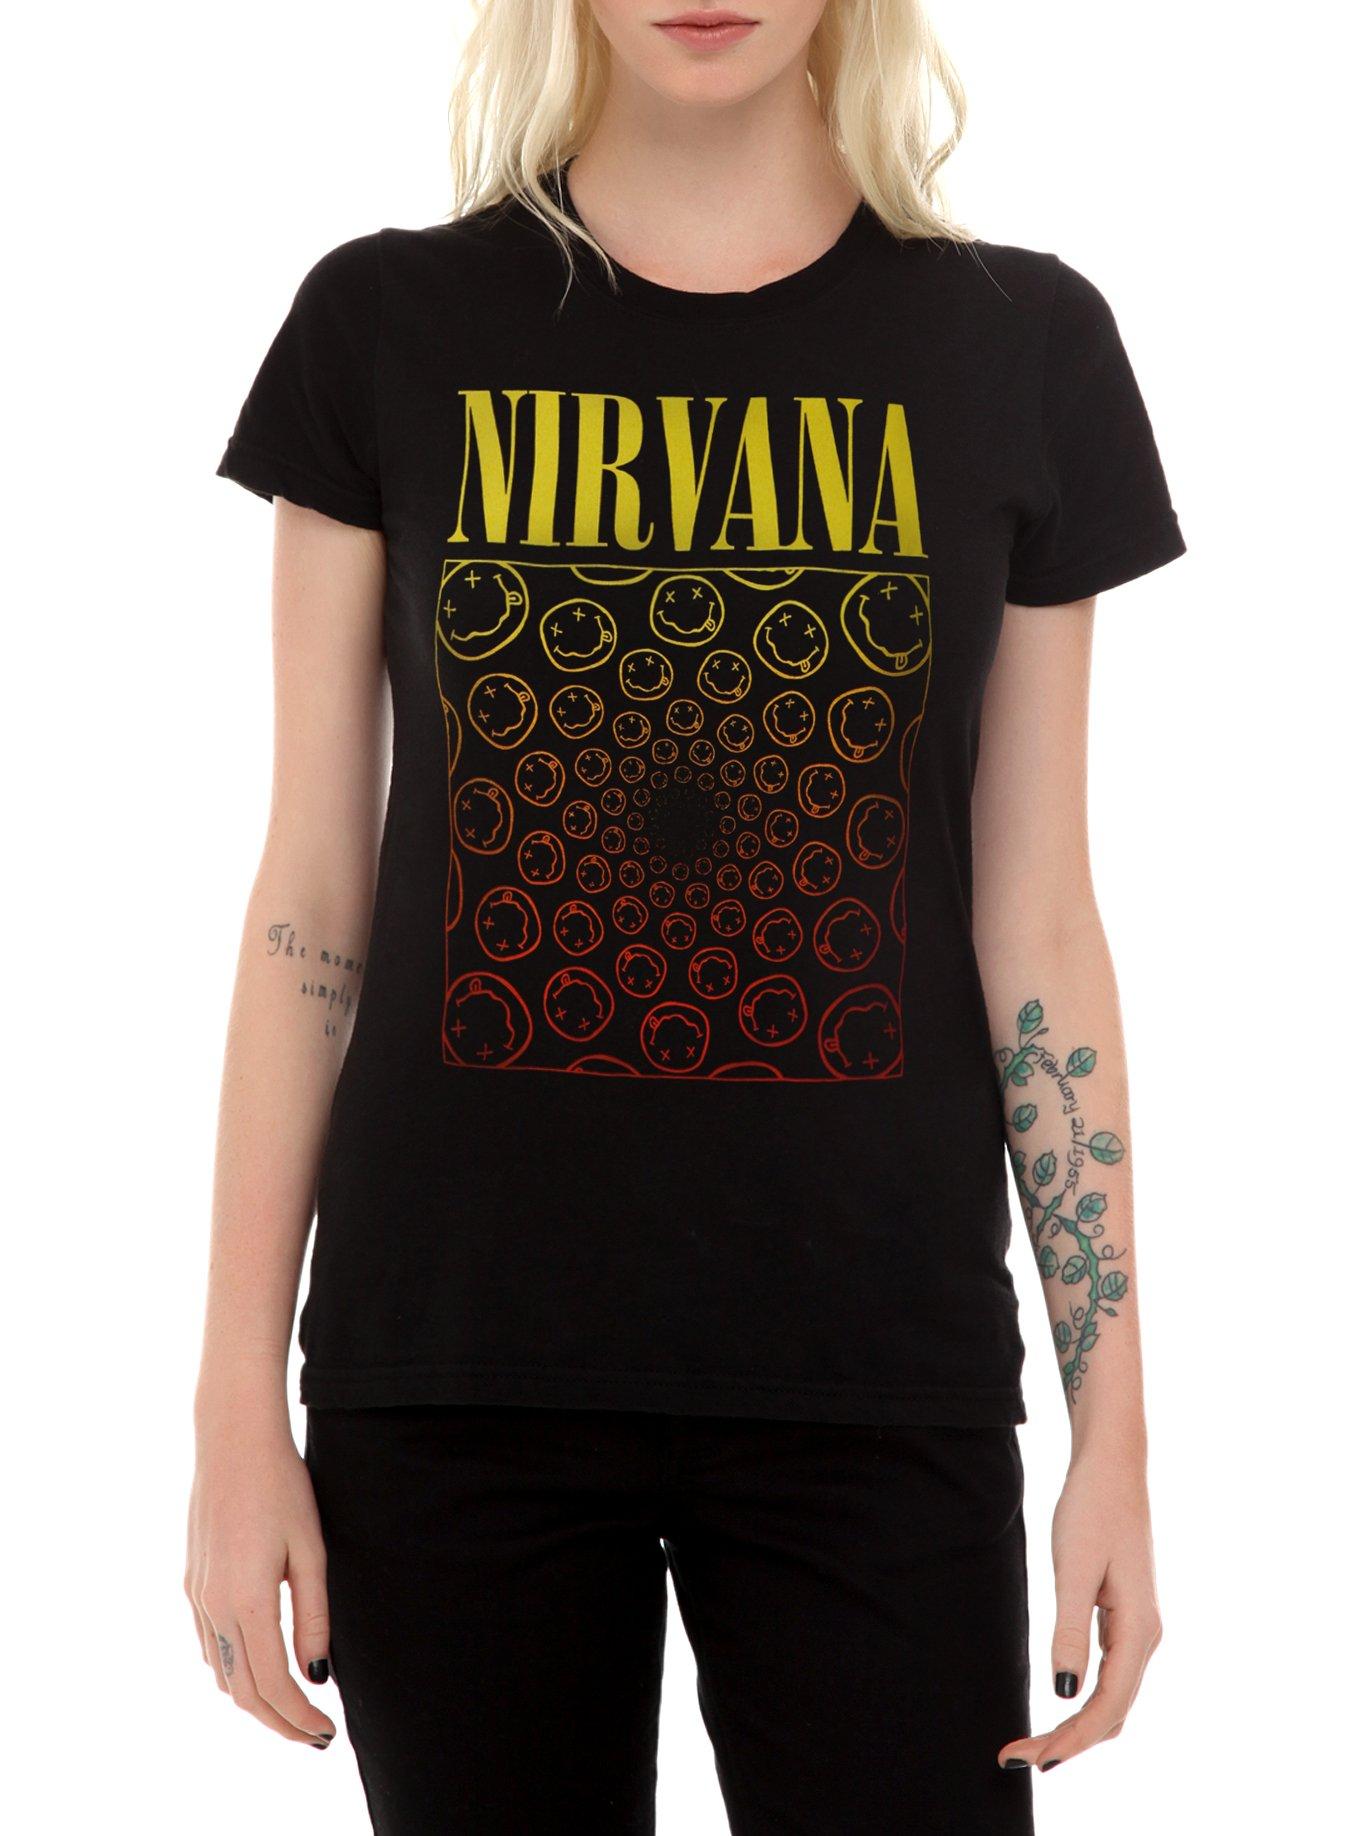 Nirvana Smiley Vortex Girls T-Shirt, BLACK, hi-res